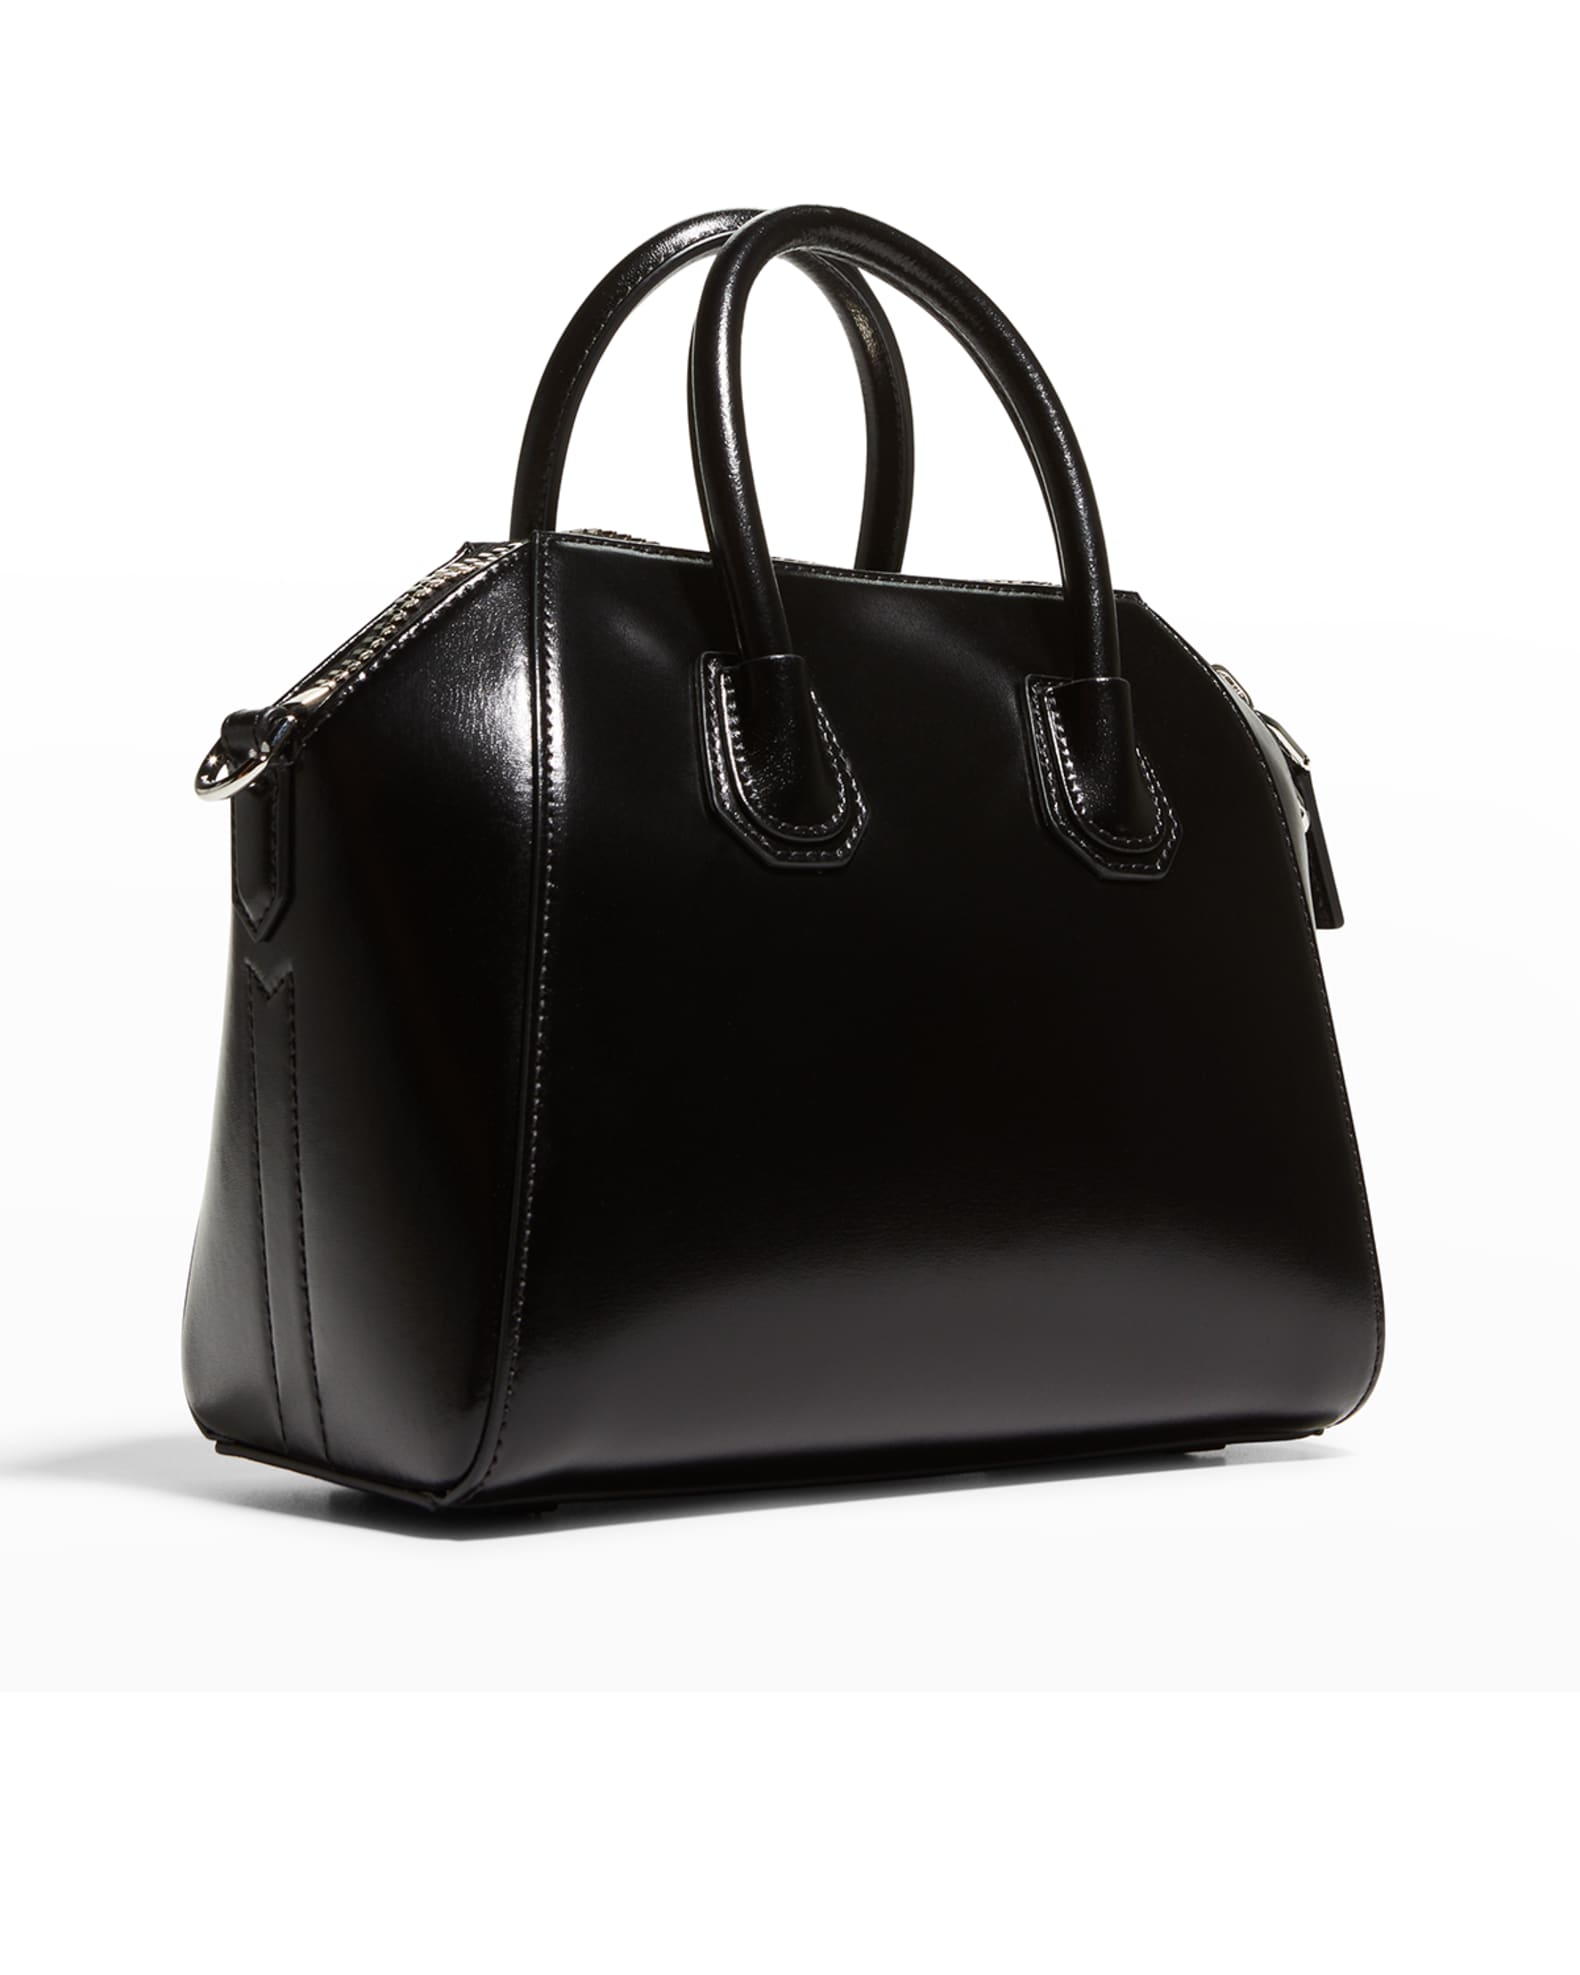 Givenchy Antigona Mini Top Handle Bag in Box Leather | Neiman Marcus